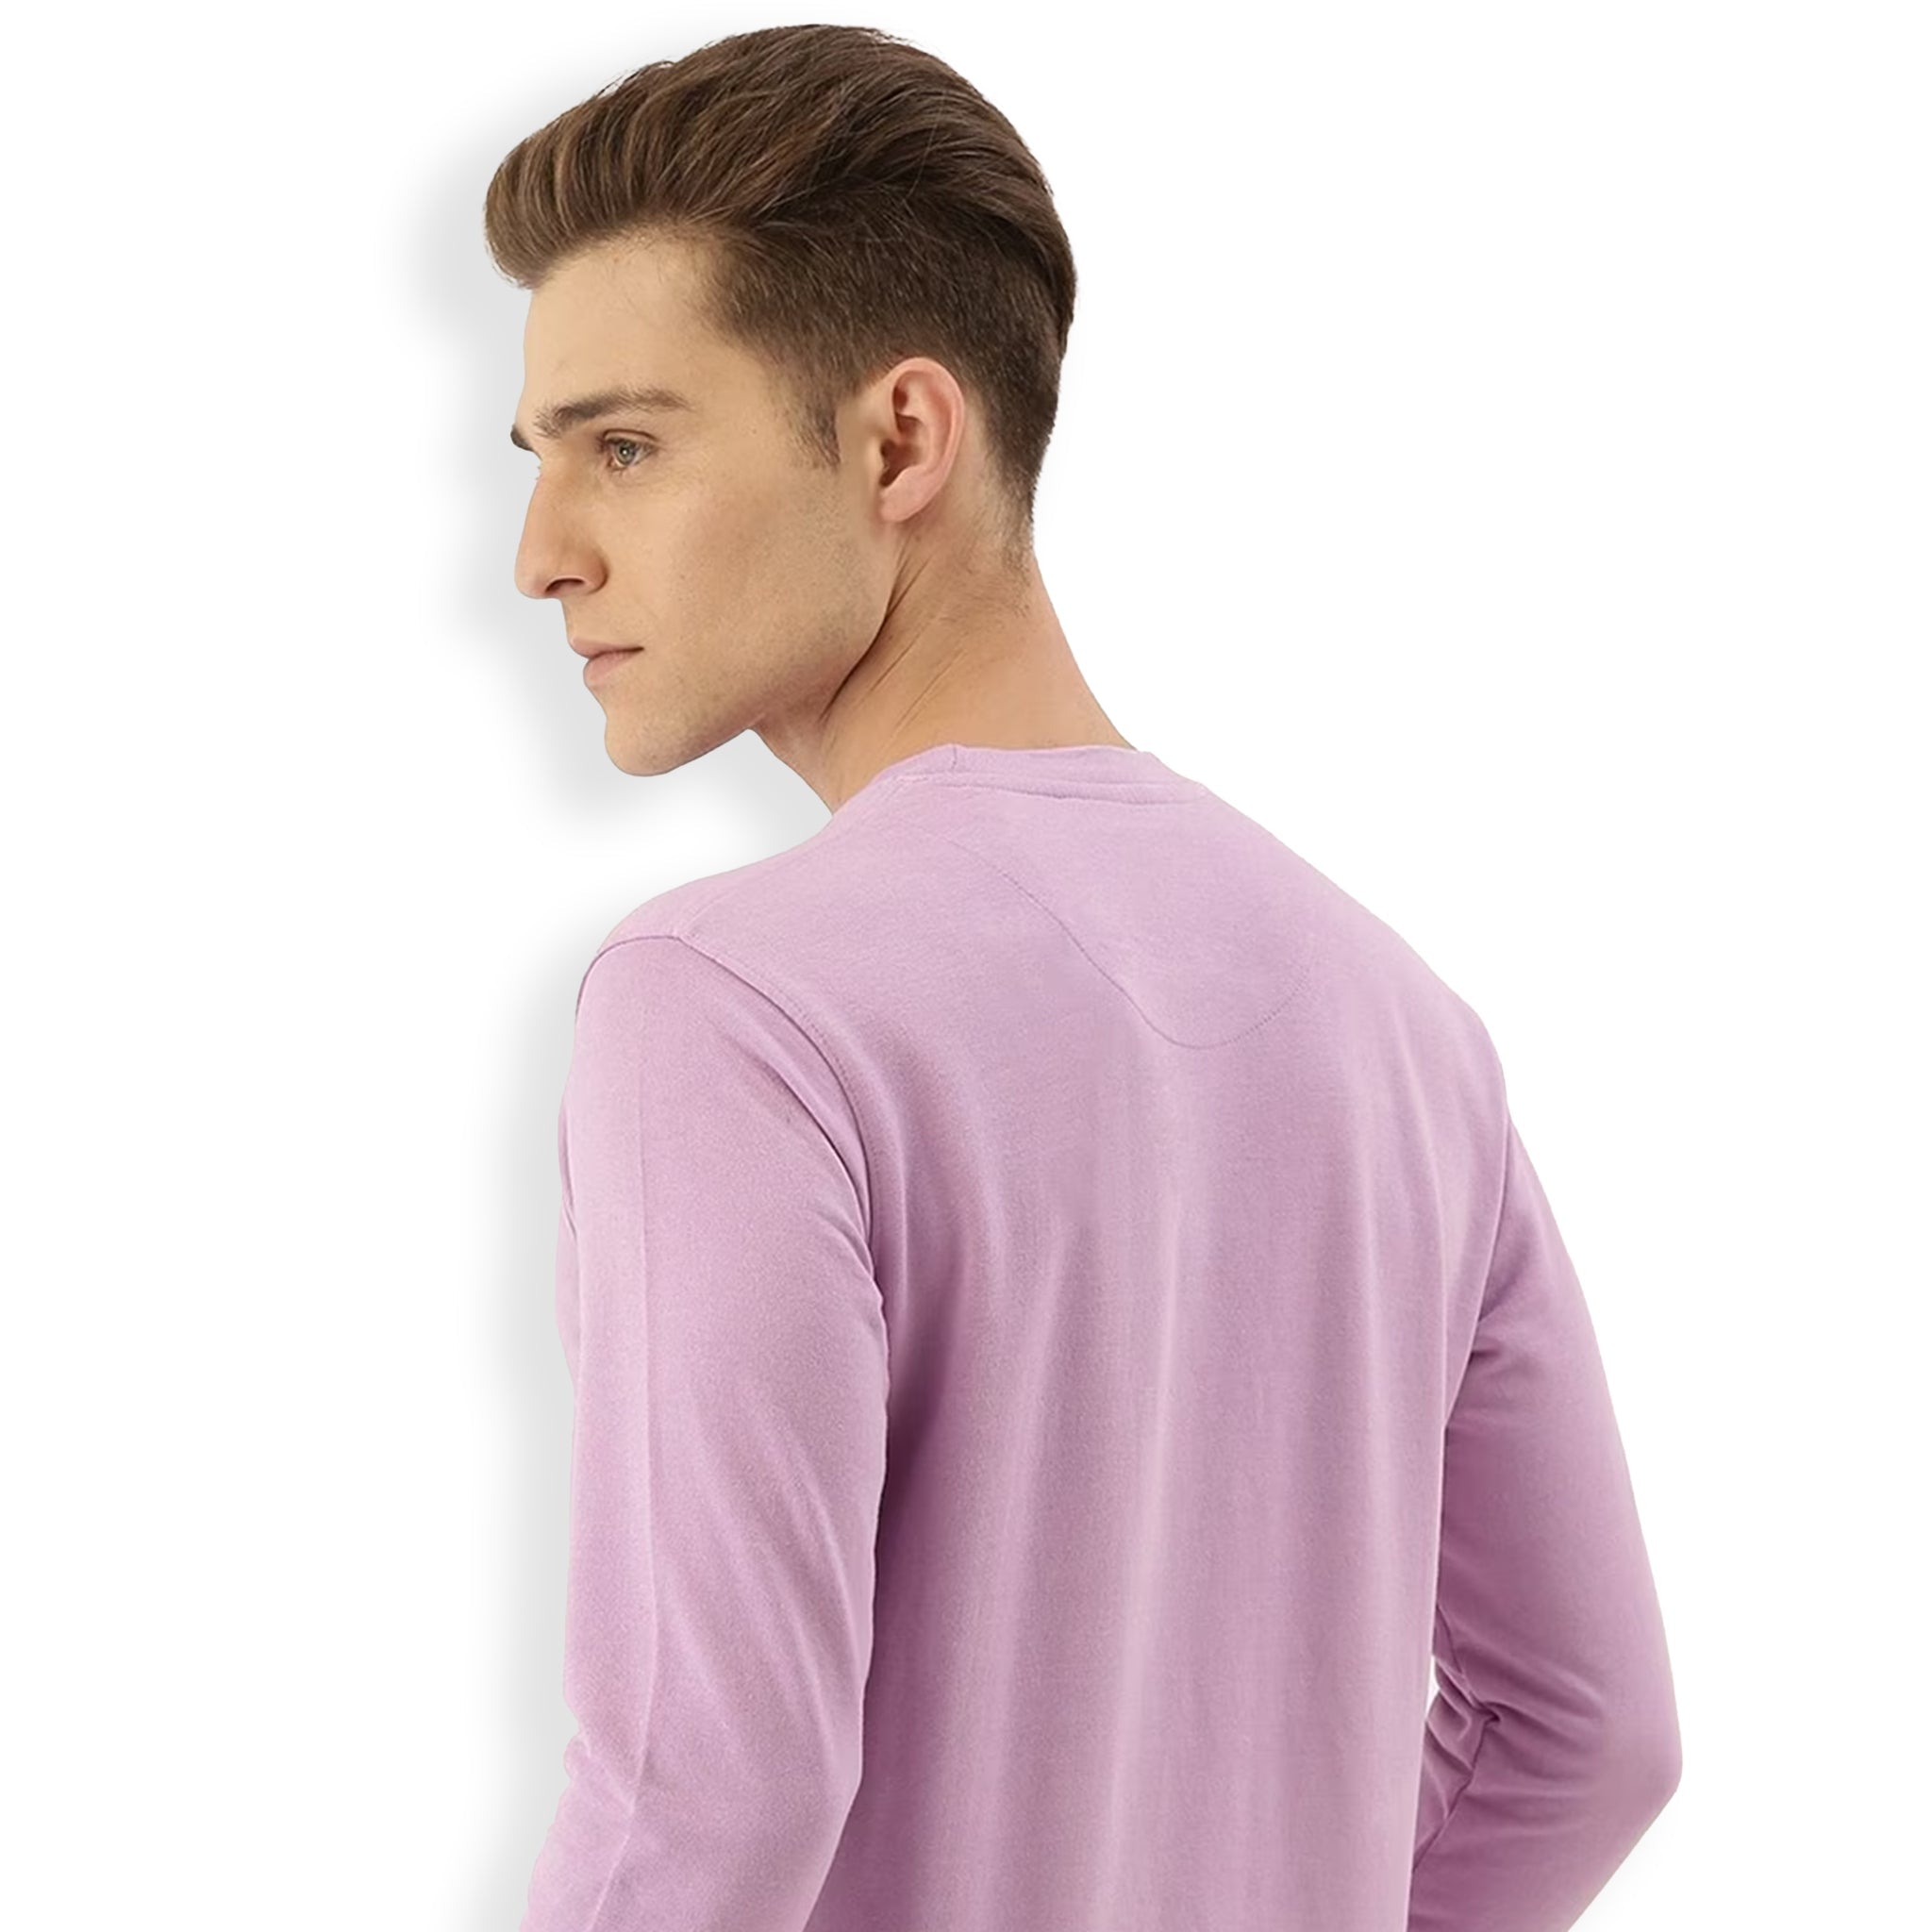 Bizzar's Light Pink Sweatshirt